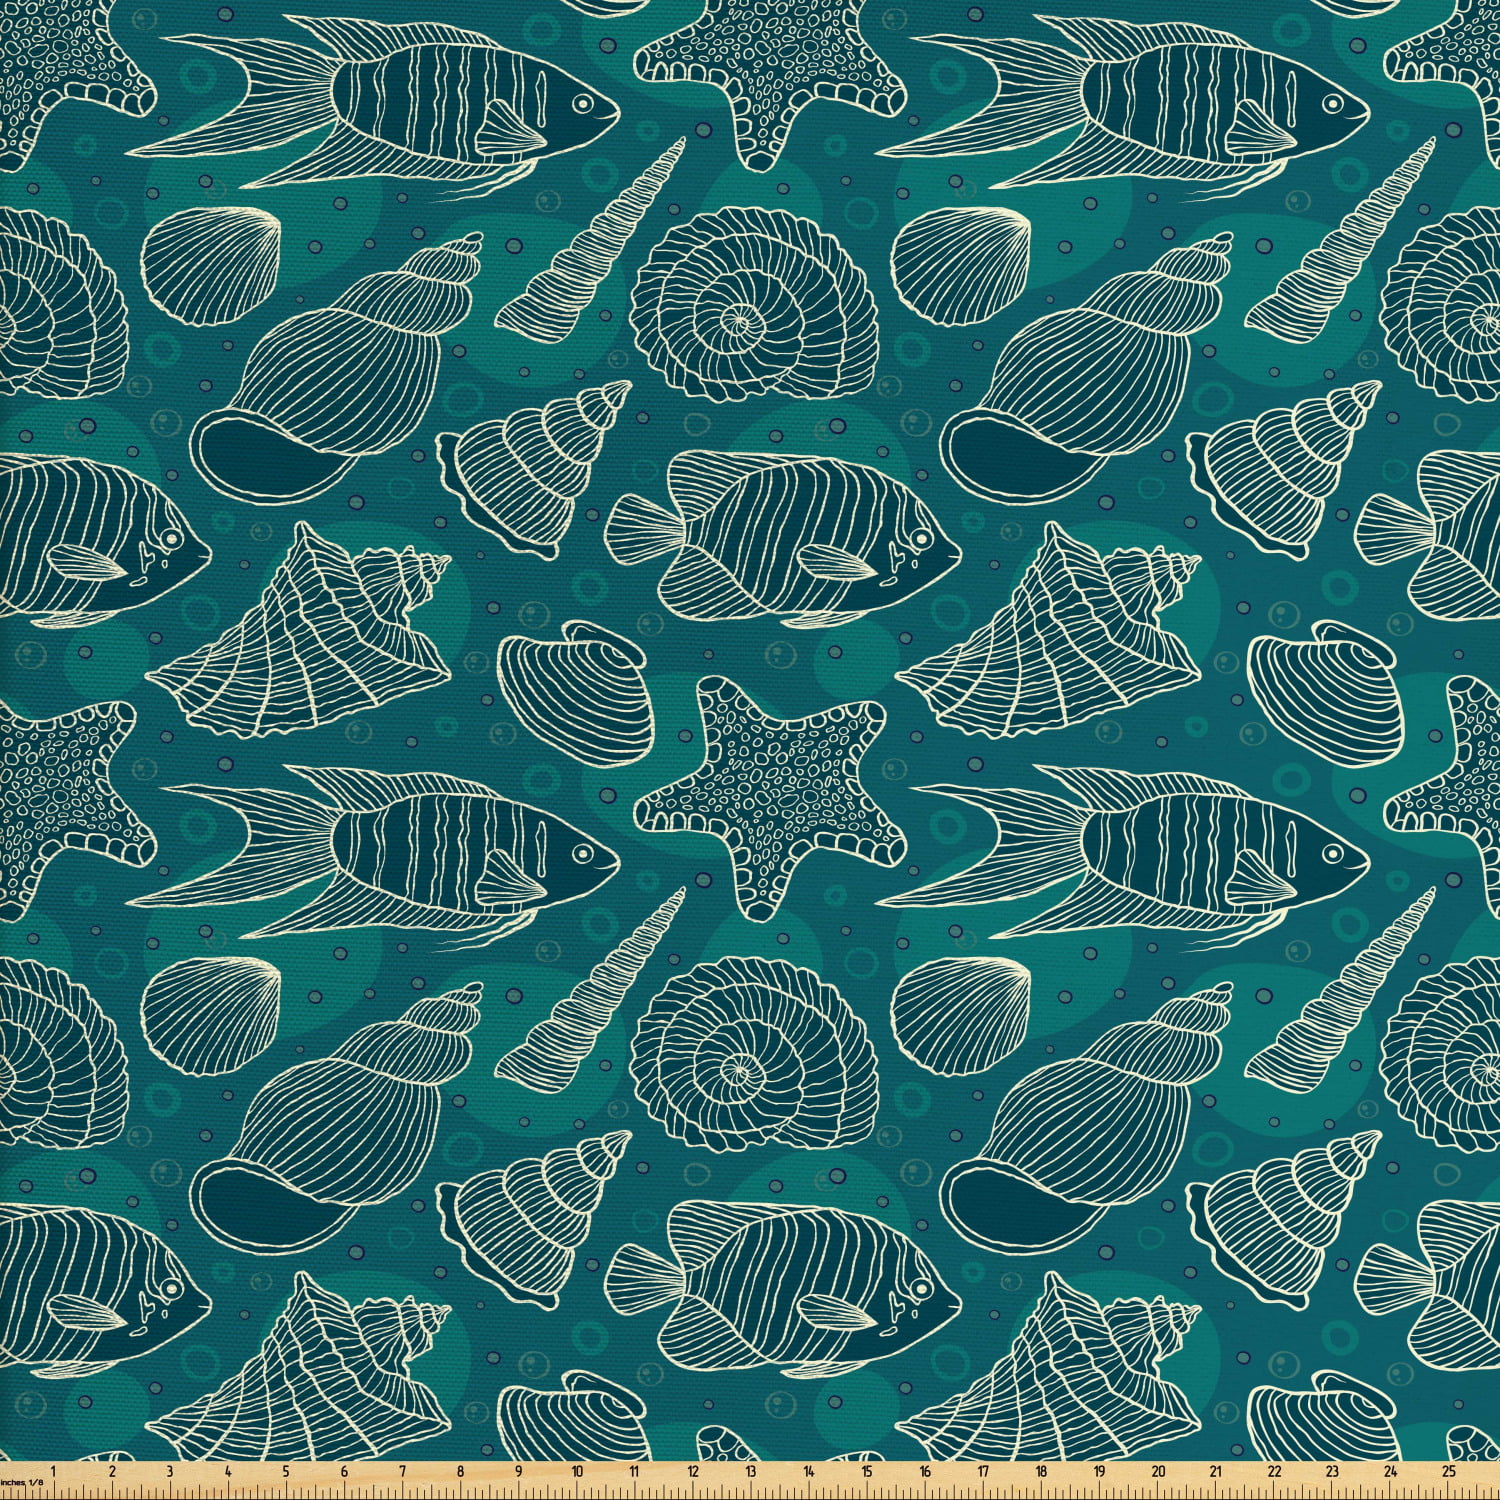 Sea Shells Fabric By The Yard Nautical Ocean Pattern Underwater World Sea Life Theme Sketch